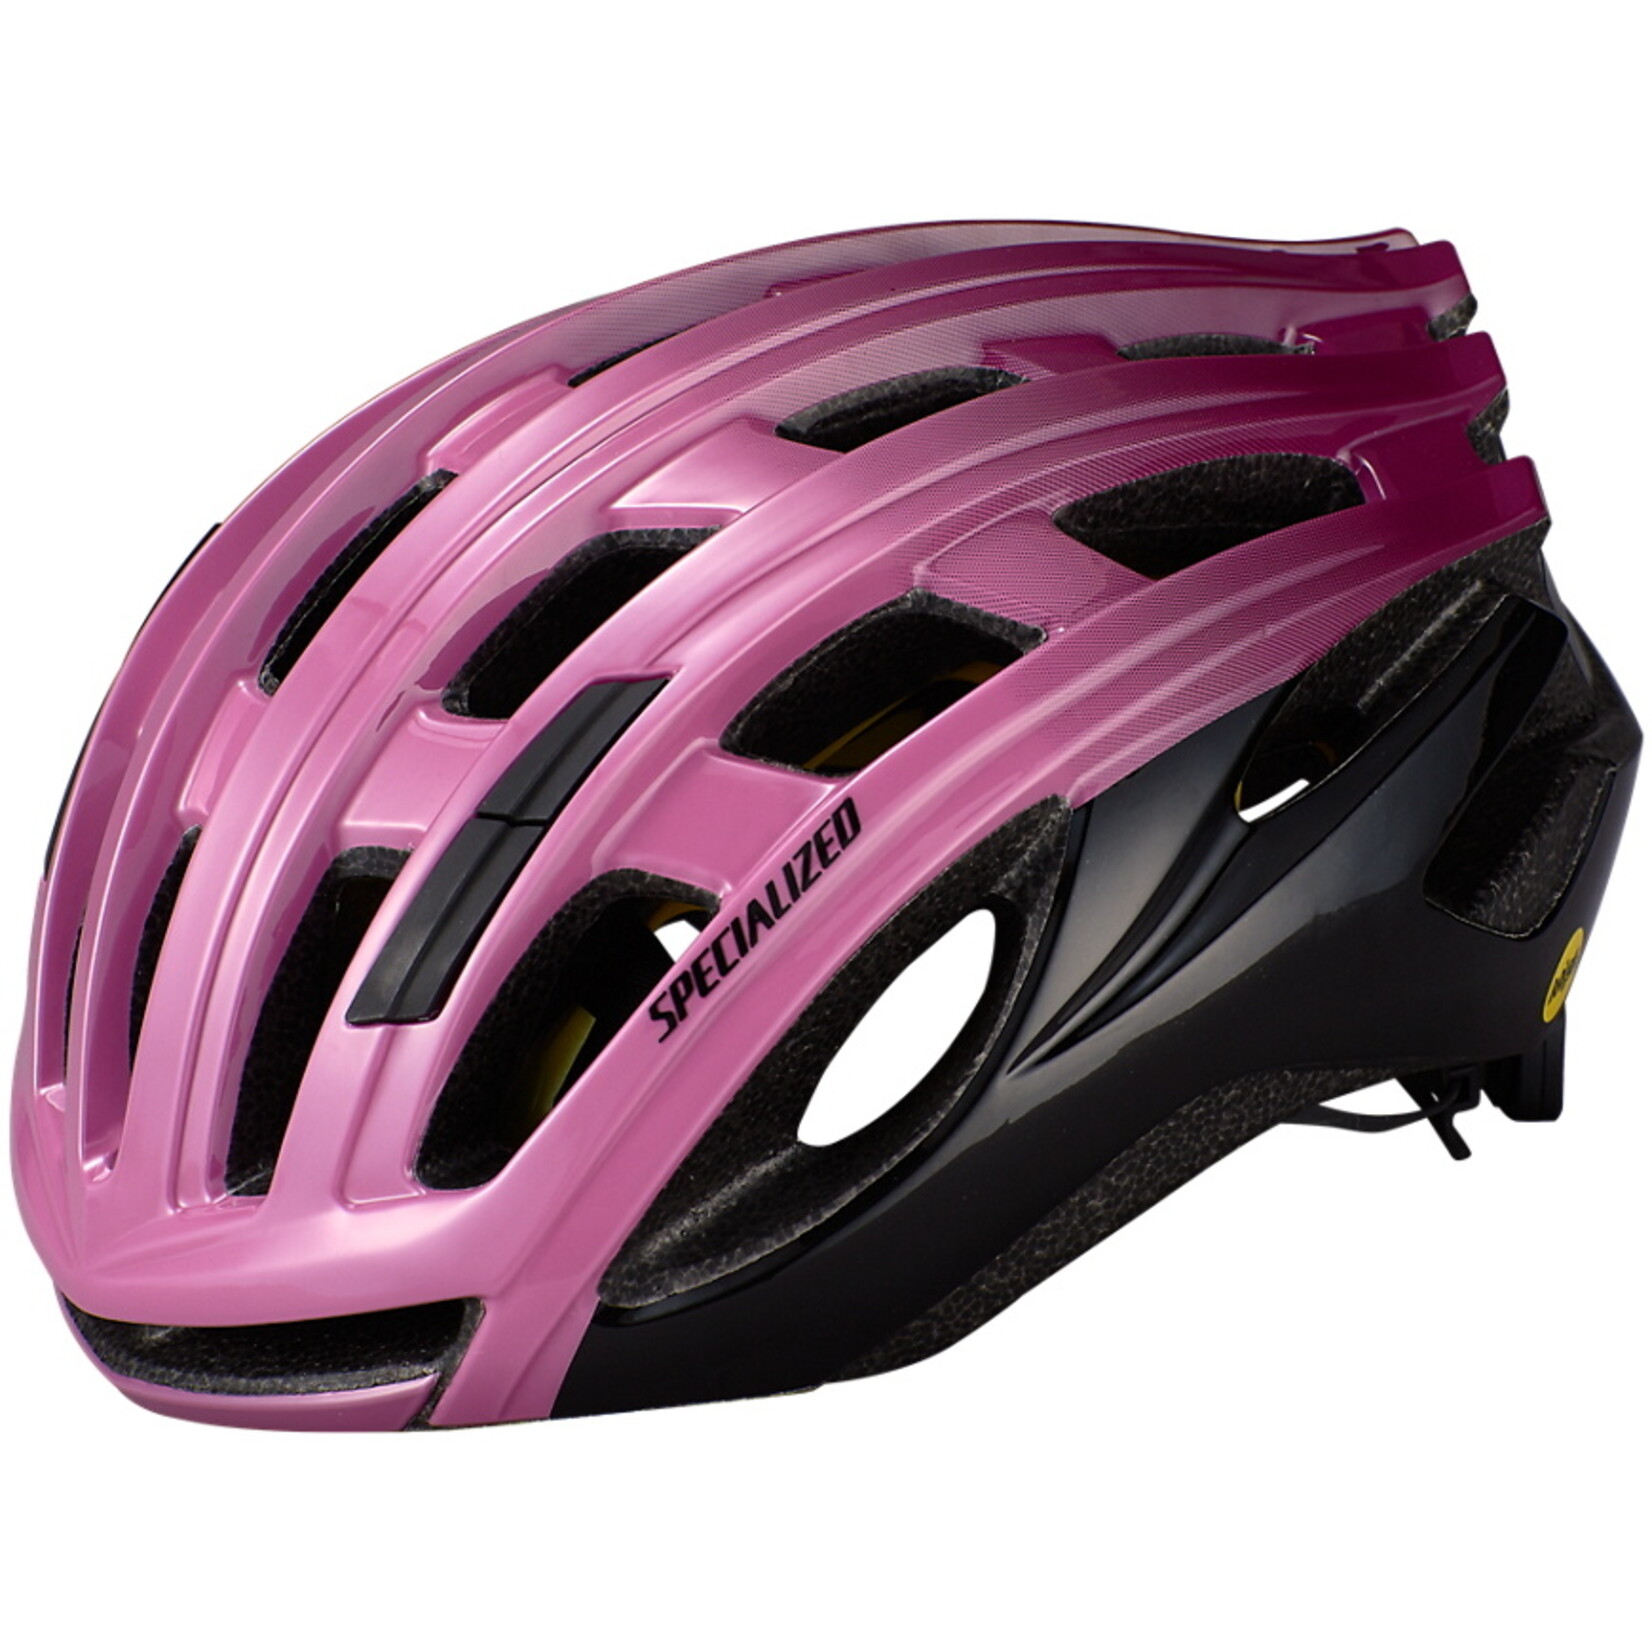 Specialized Specialized Propero 3 Angi Mips Helmet